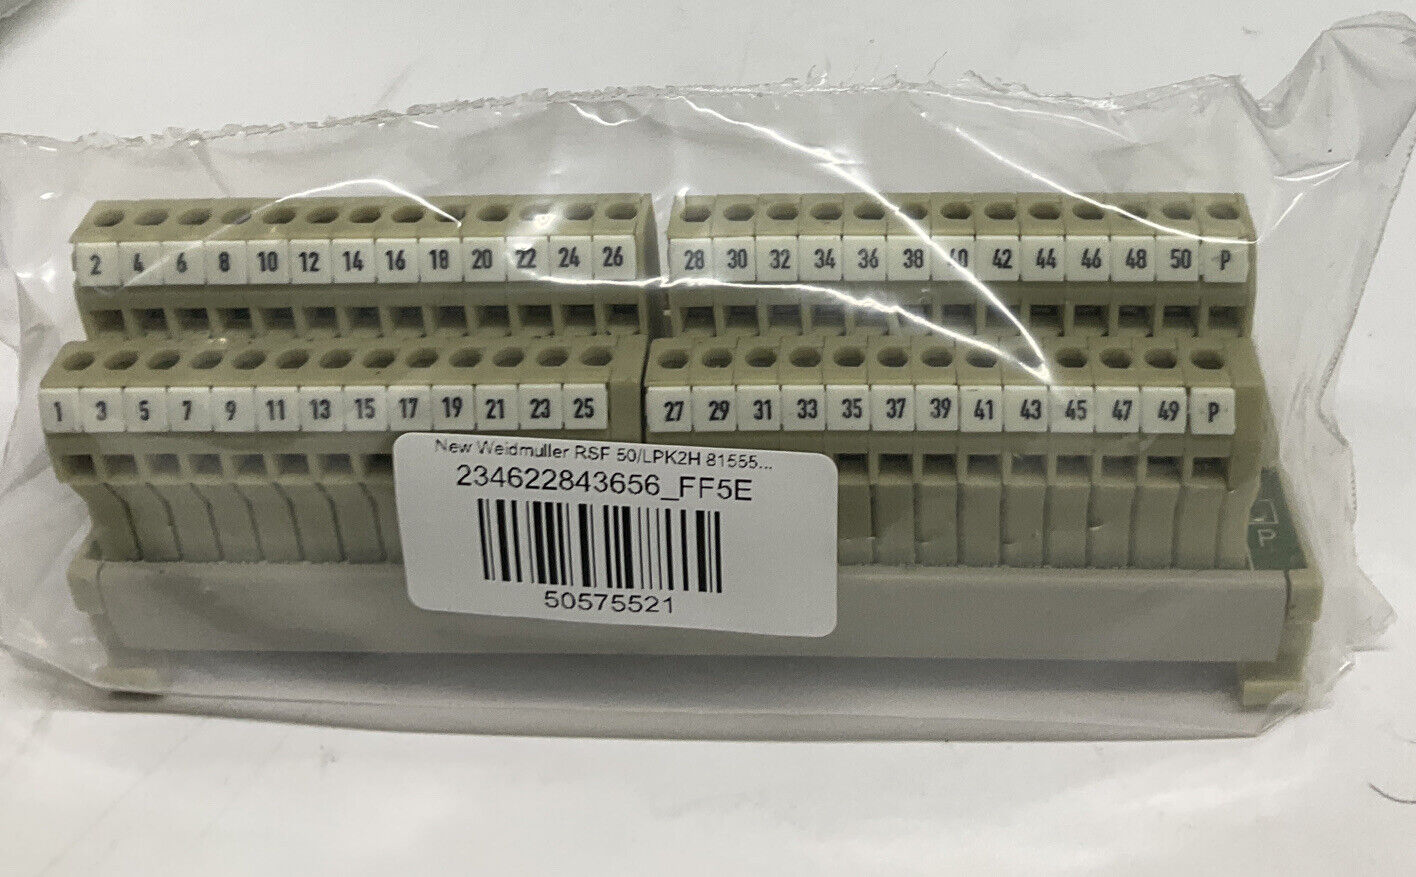 Weidmuller RSF 50/LPK2H 815557 Connector Module  (BL157) - 0